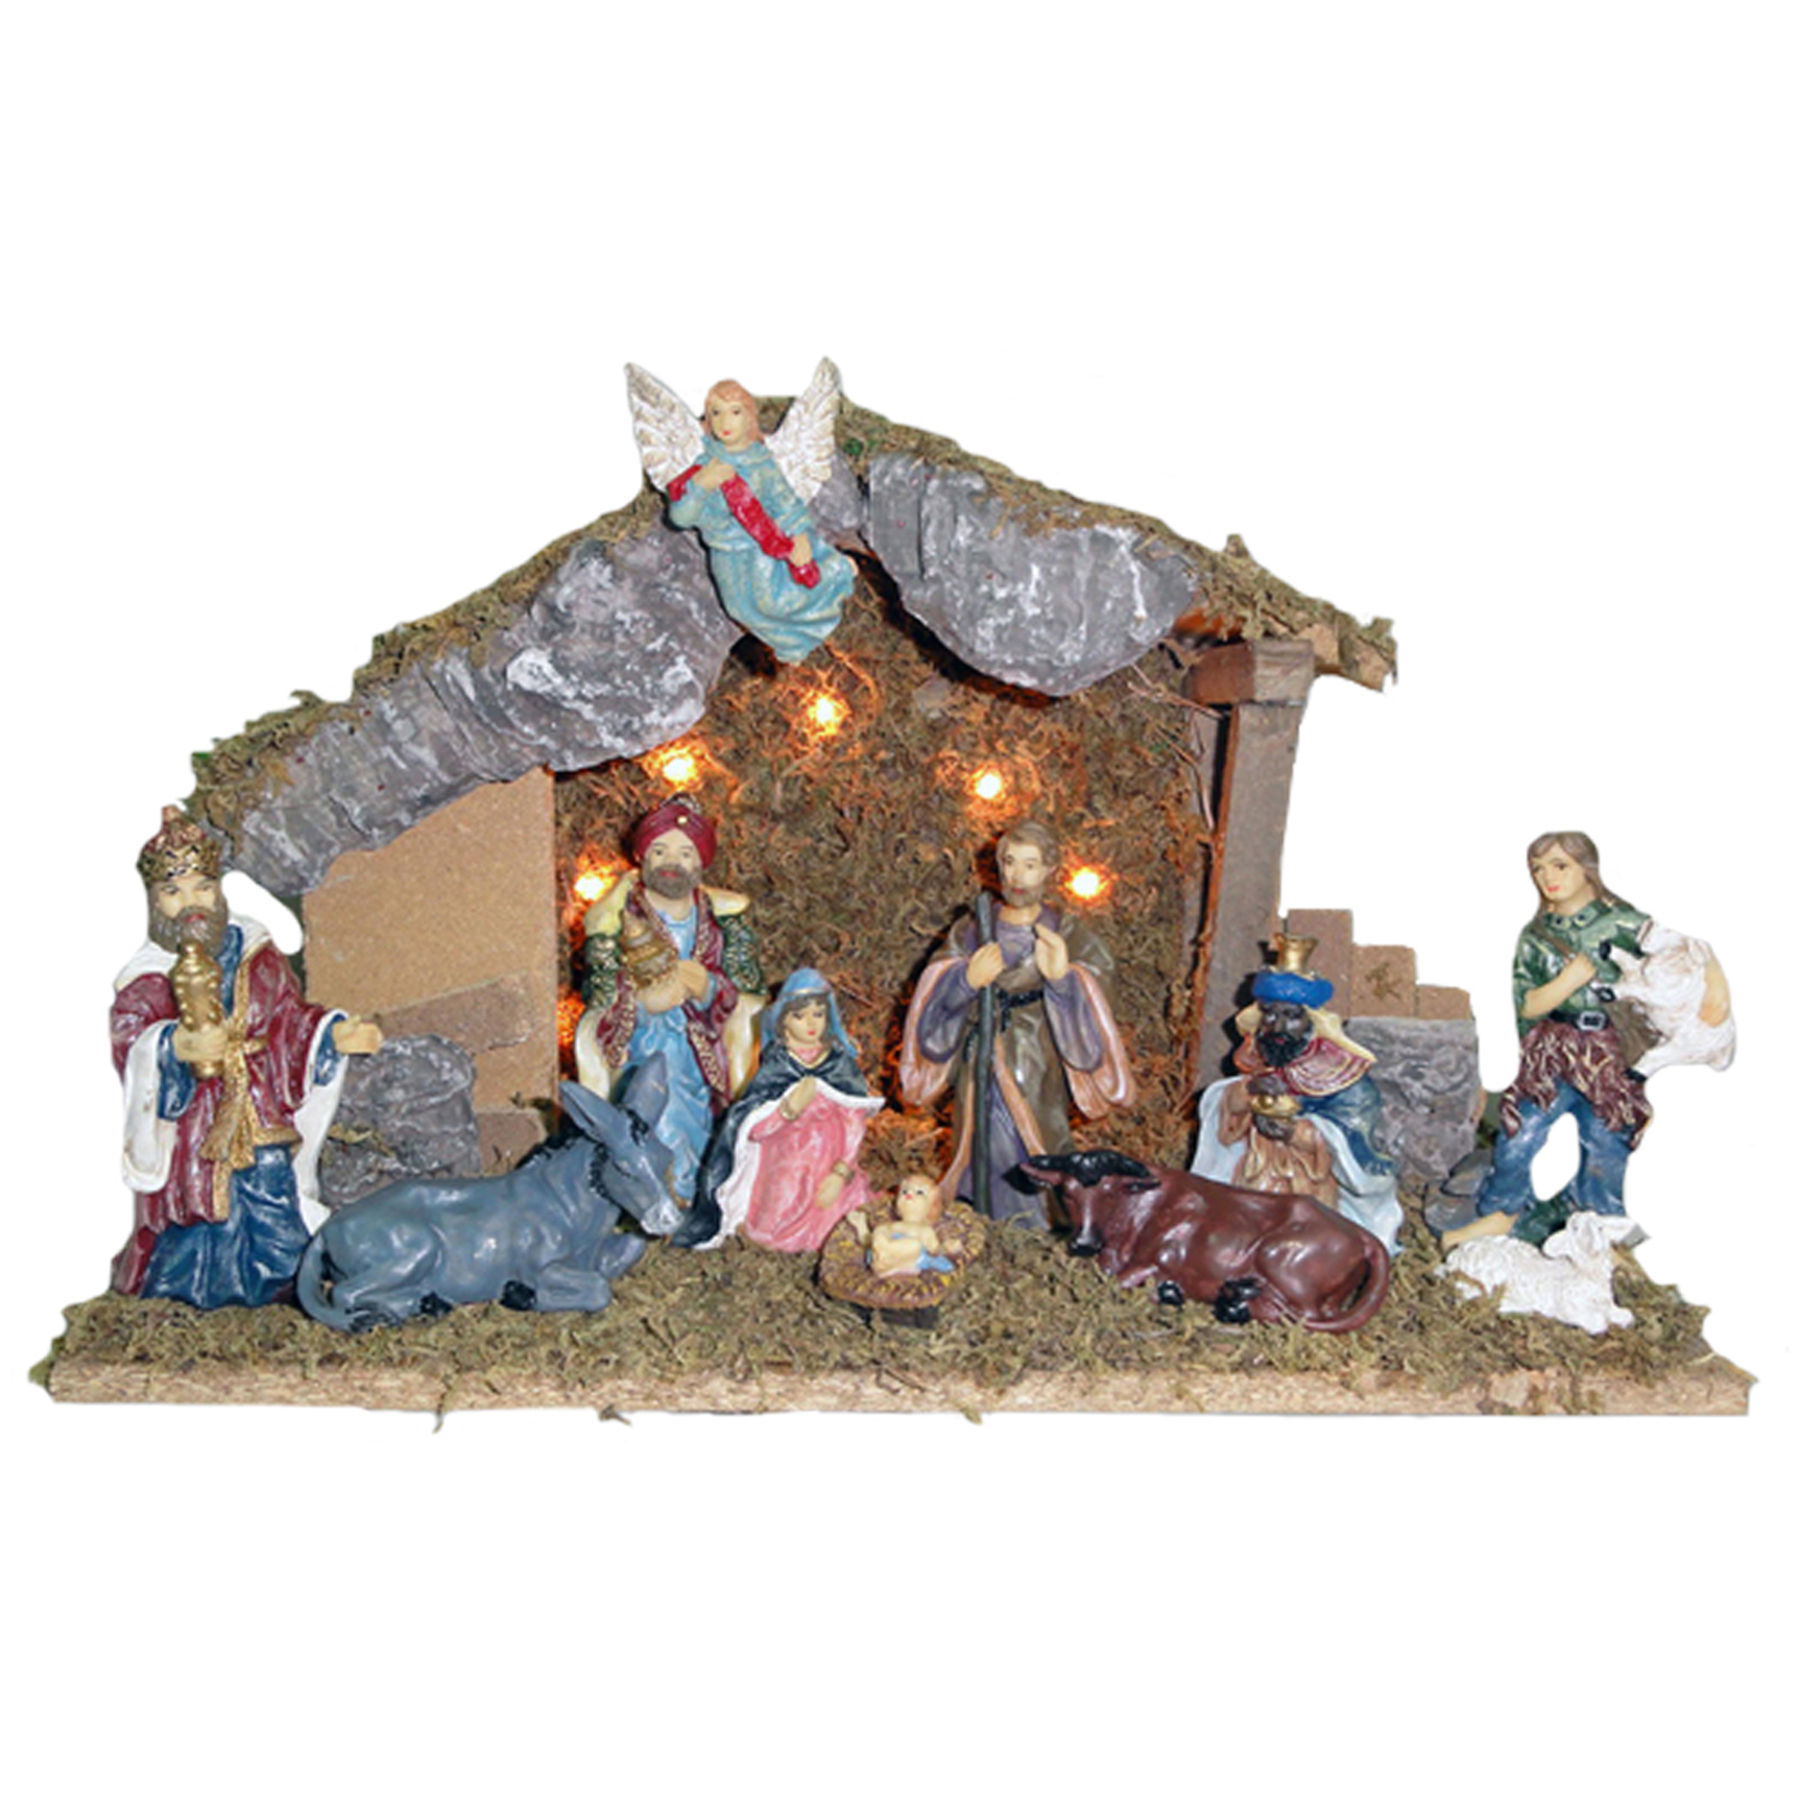 Kurt Adler 15.35" Lighted Wooden Stable with 11 Resin Figures Nativity Set Christmas Decoration